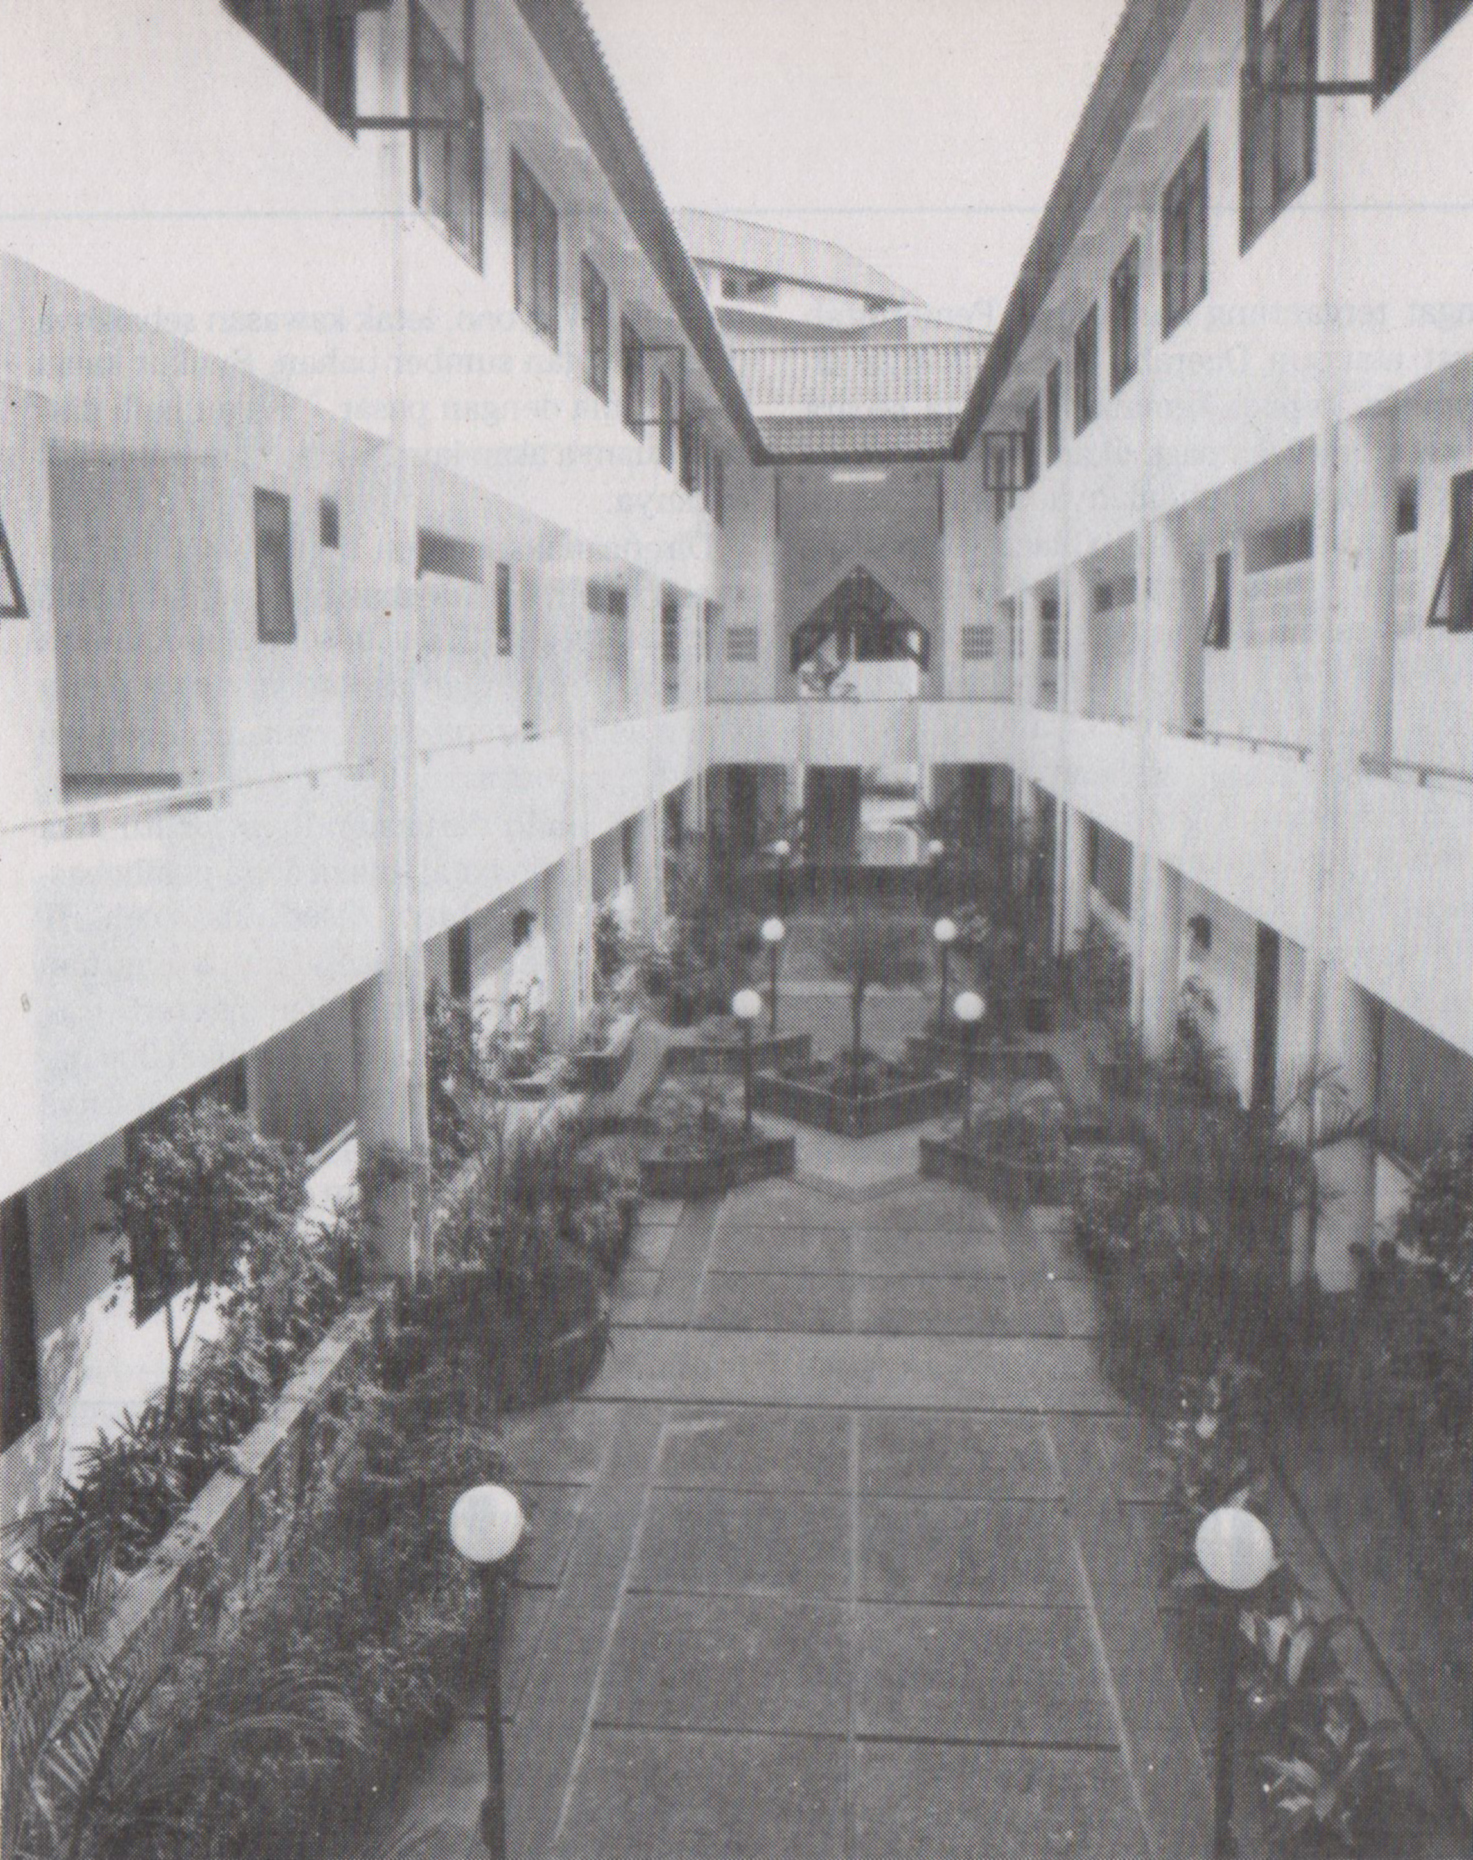 Kos-kosan/Rumah teras Pondok Klub Villa Jakarta, 1991